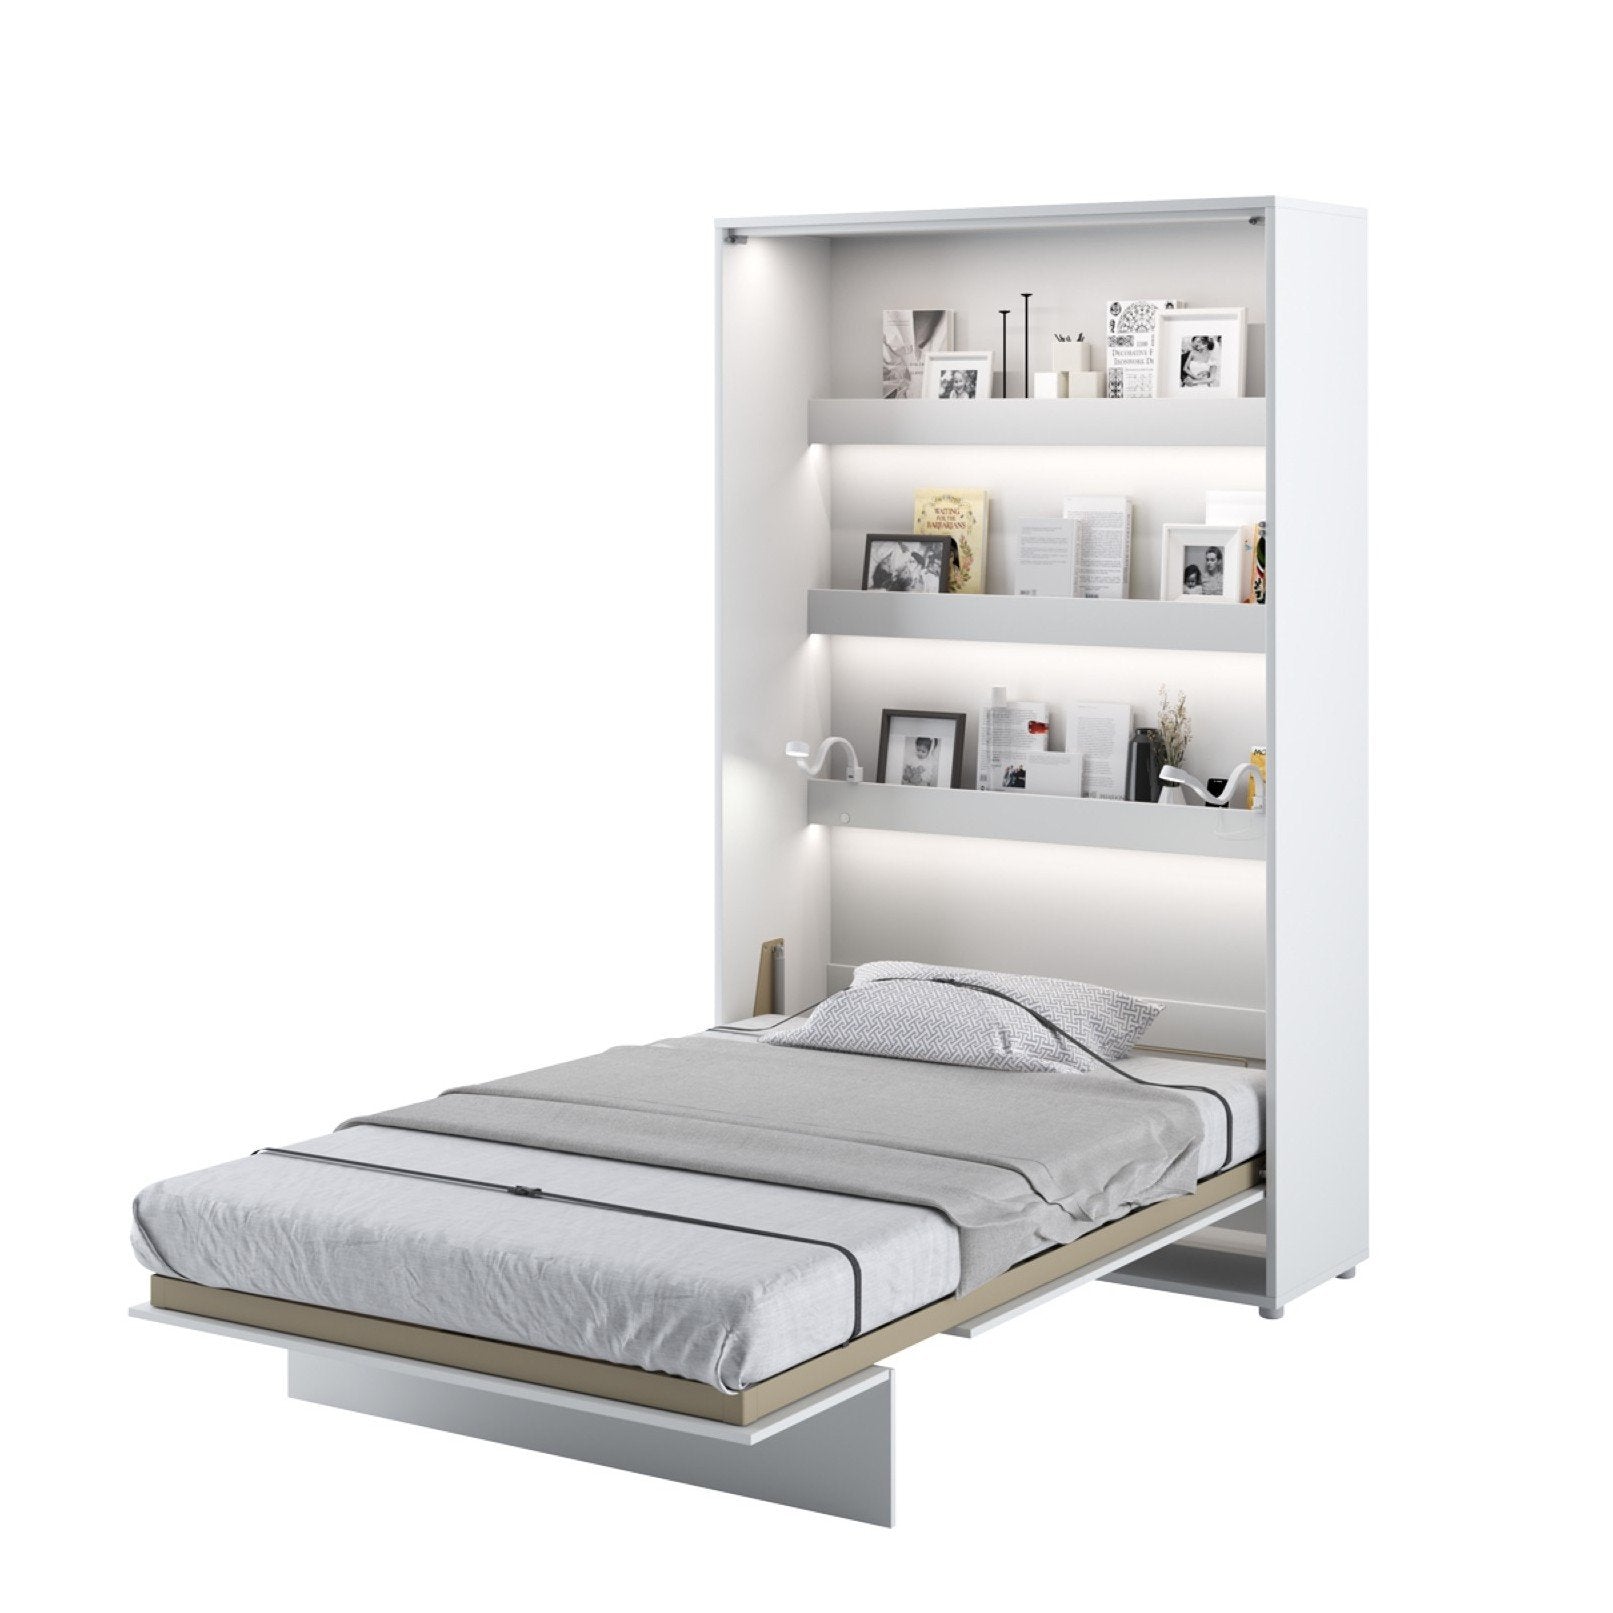 View BC02 Vertical Wall Bed Concept 120cm Murphy Bed White Matt 120 x 200cm information